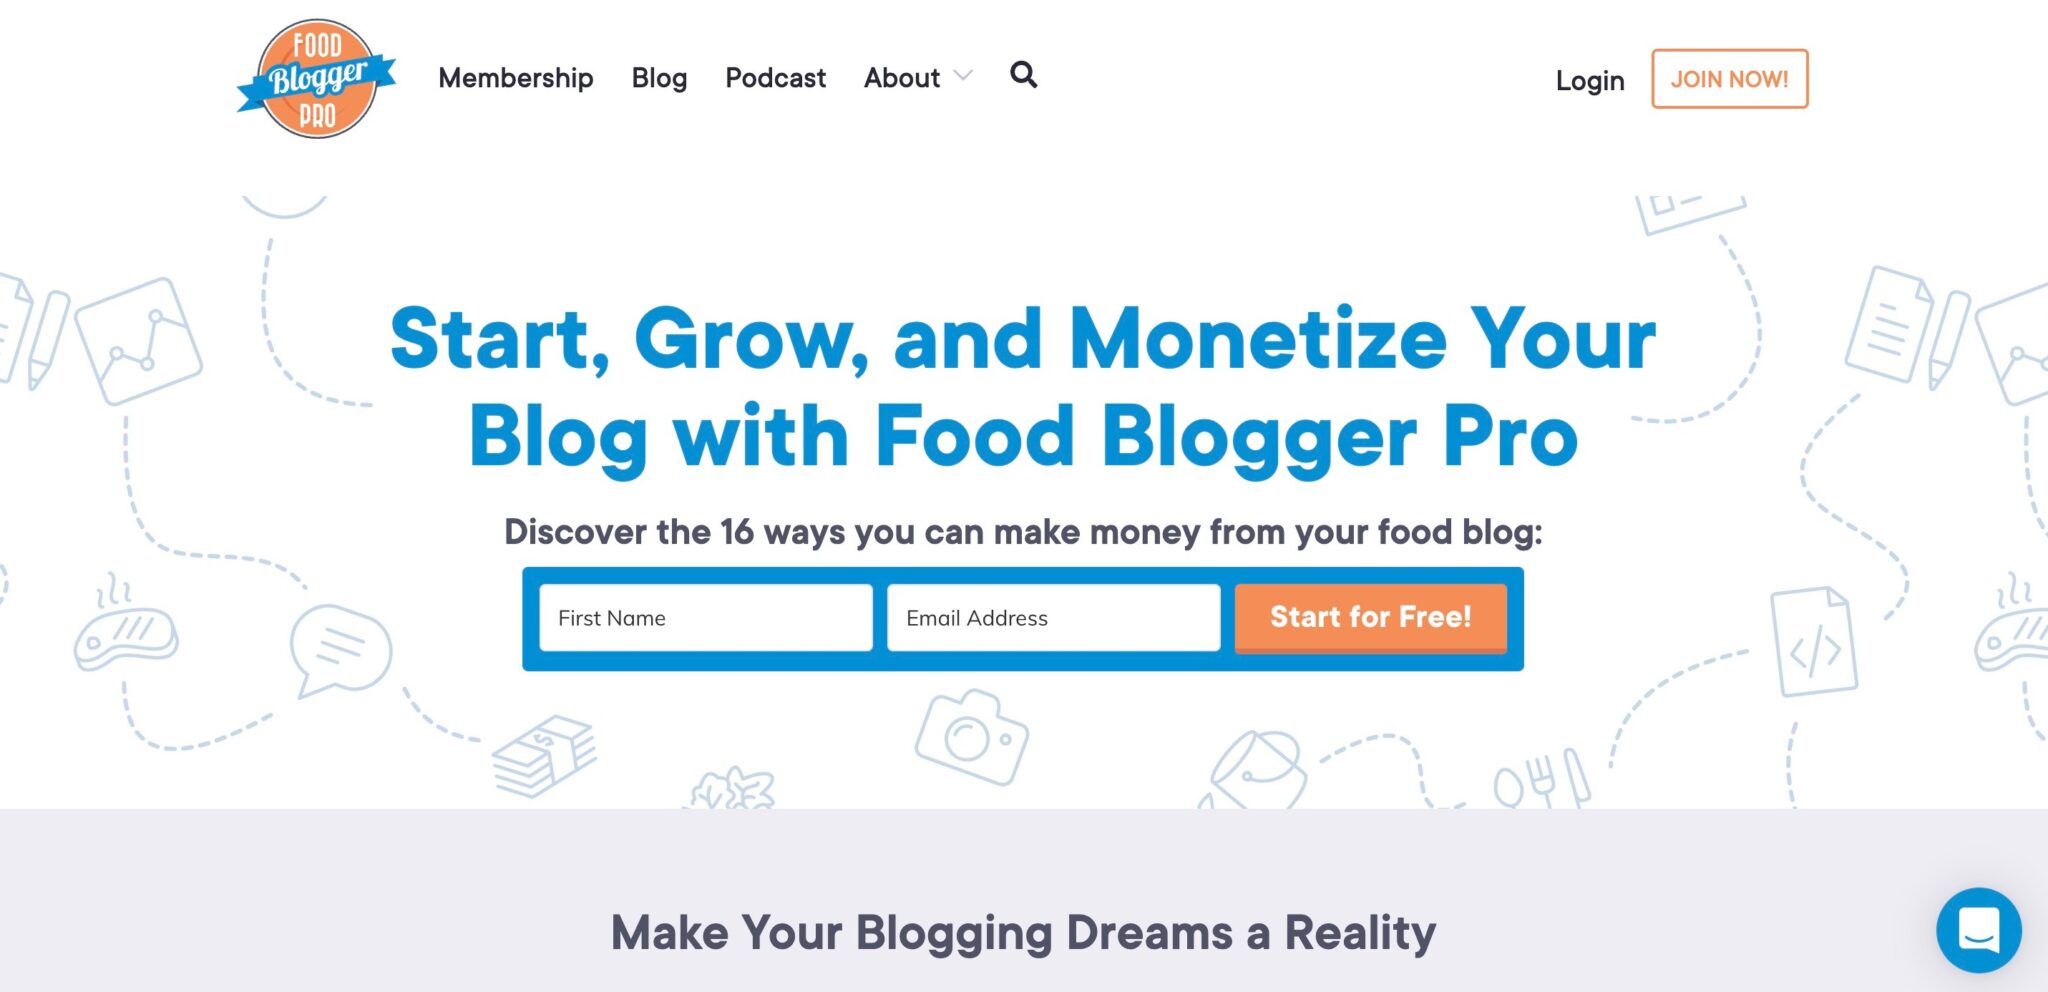 How to start a community website like foodbloggerpro